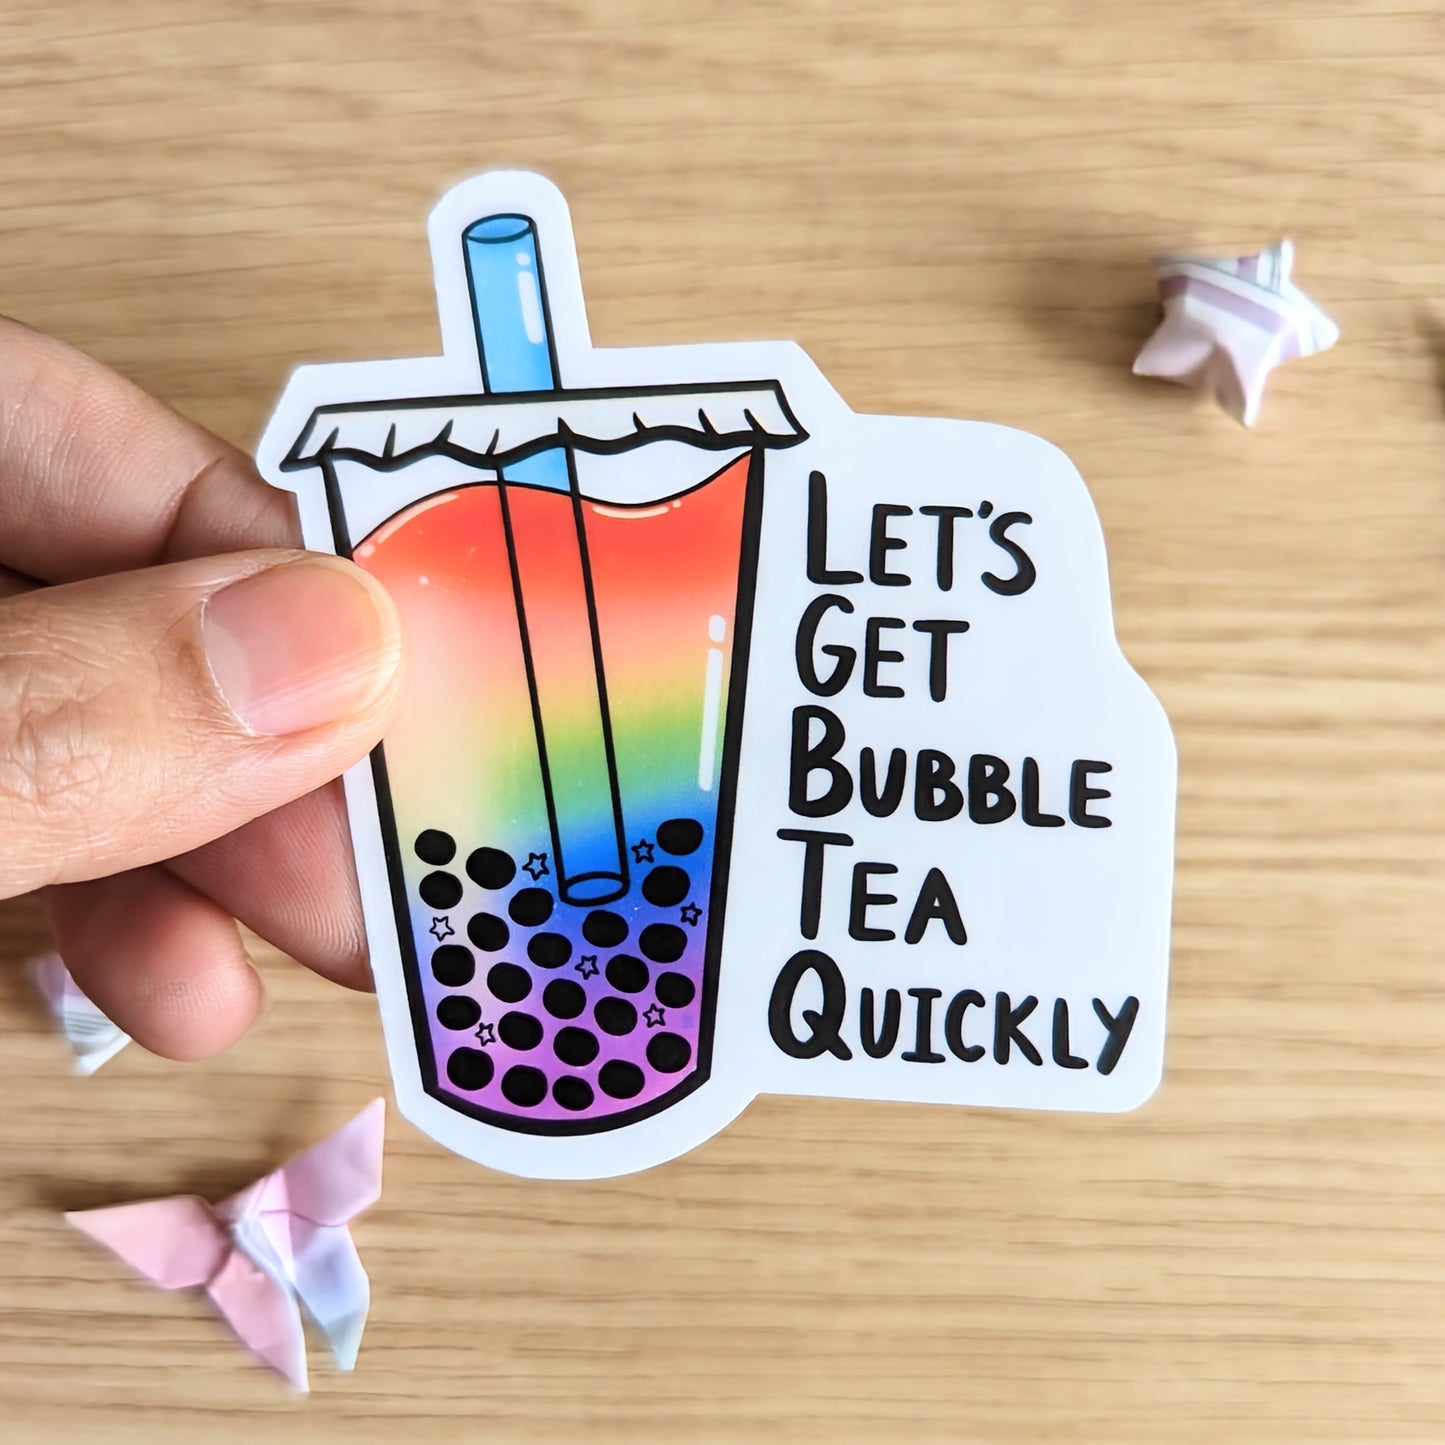 Lets Get Bubble Tea Quickly - LGBTQ Bubble Tea Sticker